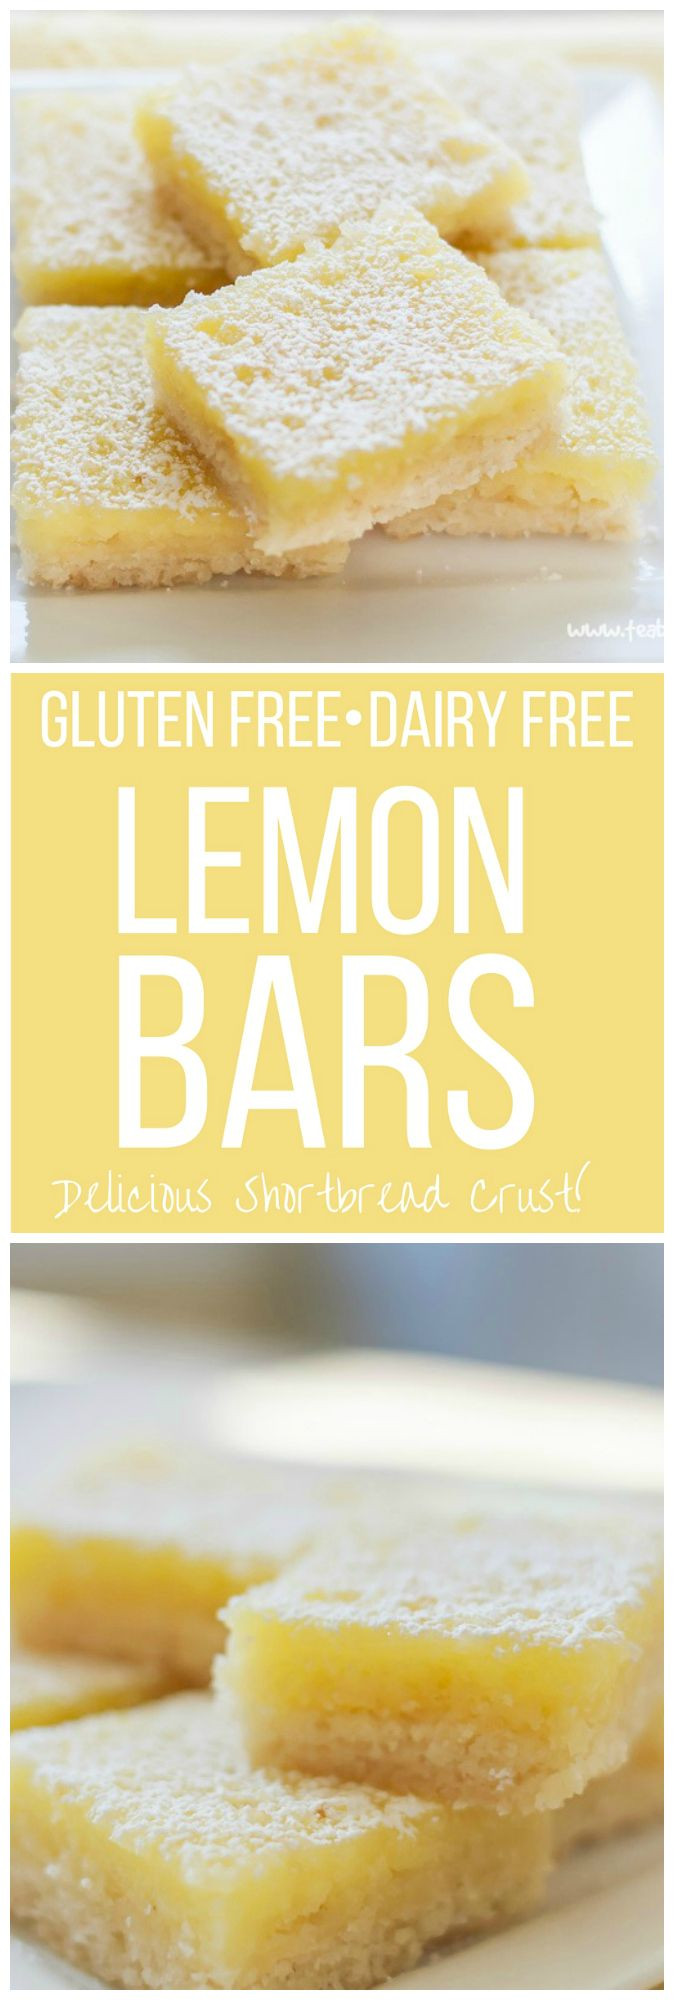 Gluten Free Dessert Bars
 A delicious Dairy Free and Gluten Free lemon bars recipe